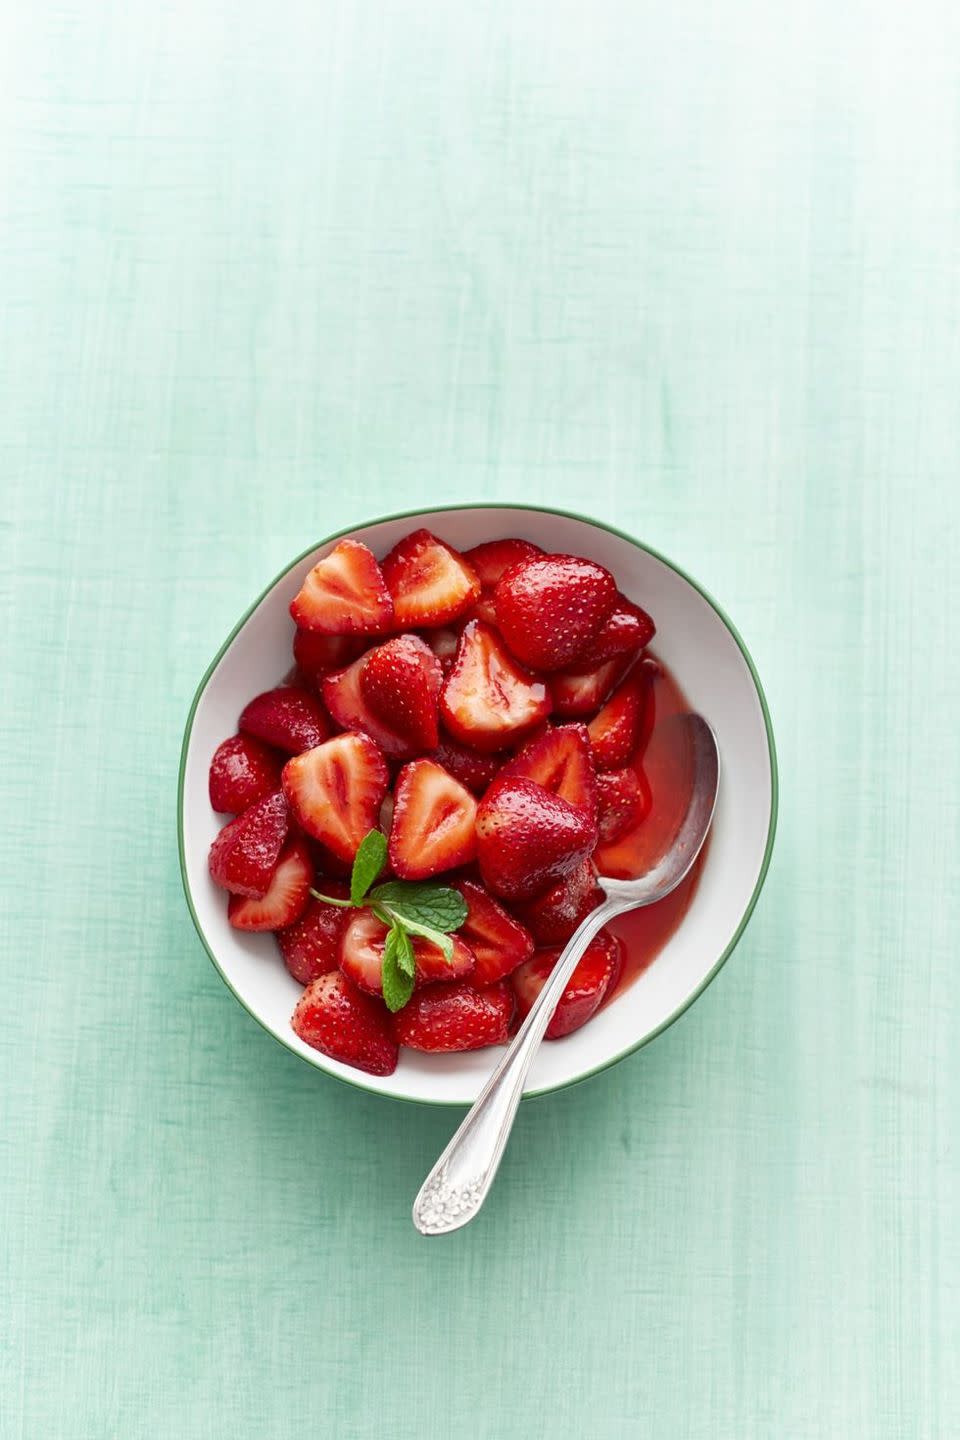 easy no bake desserts like sweet strawberries